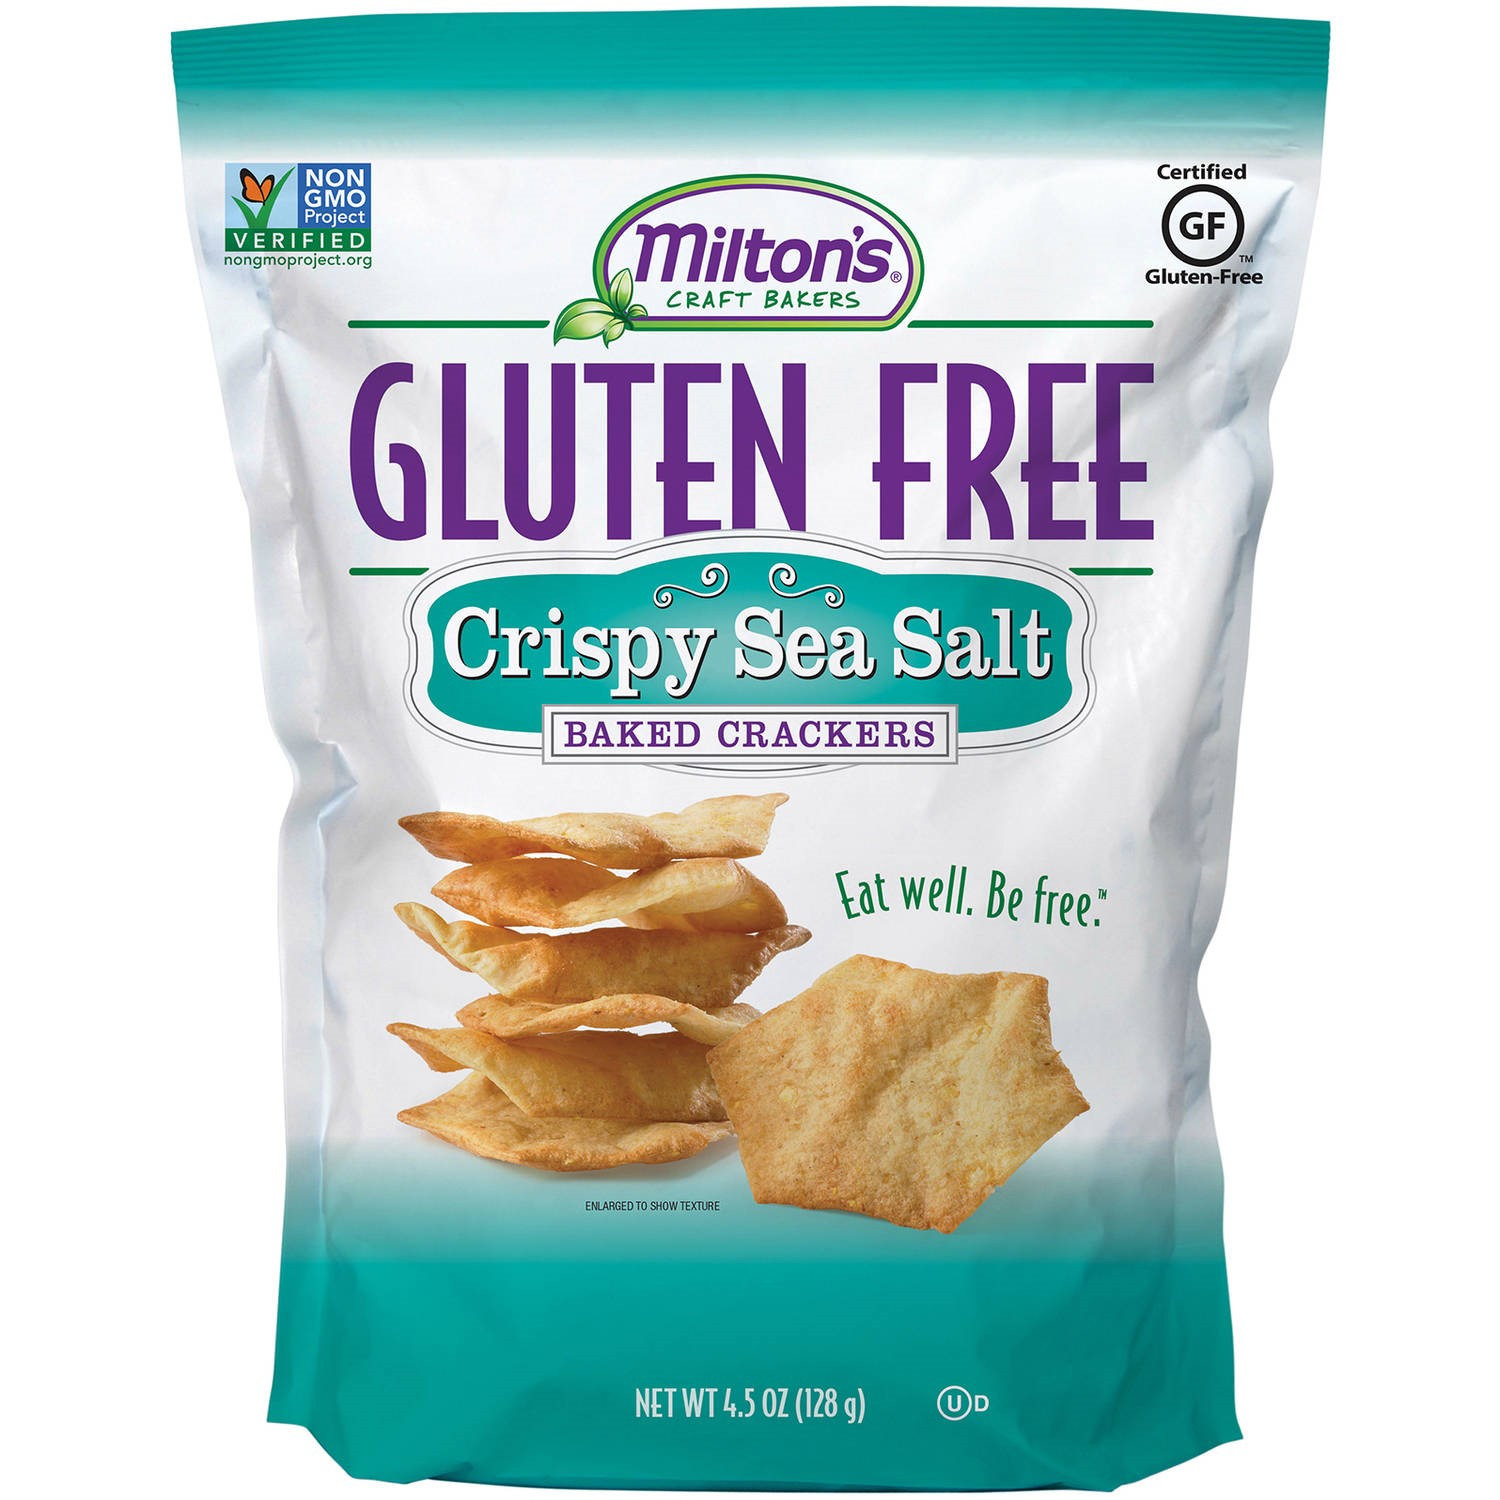 Gluten Free Crackers Walmart
 Milton s Gluten Free Baked Crackers Crispy Sea Salt 4 5